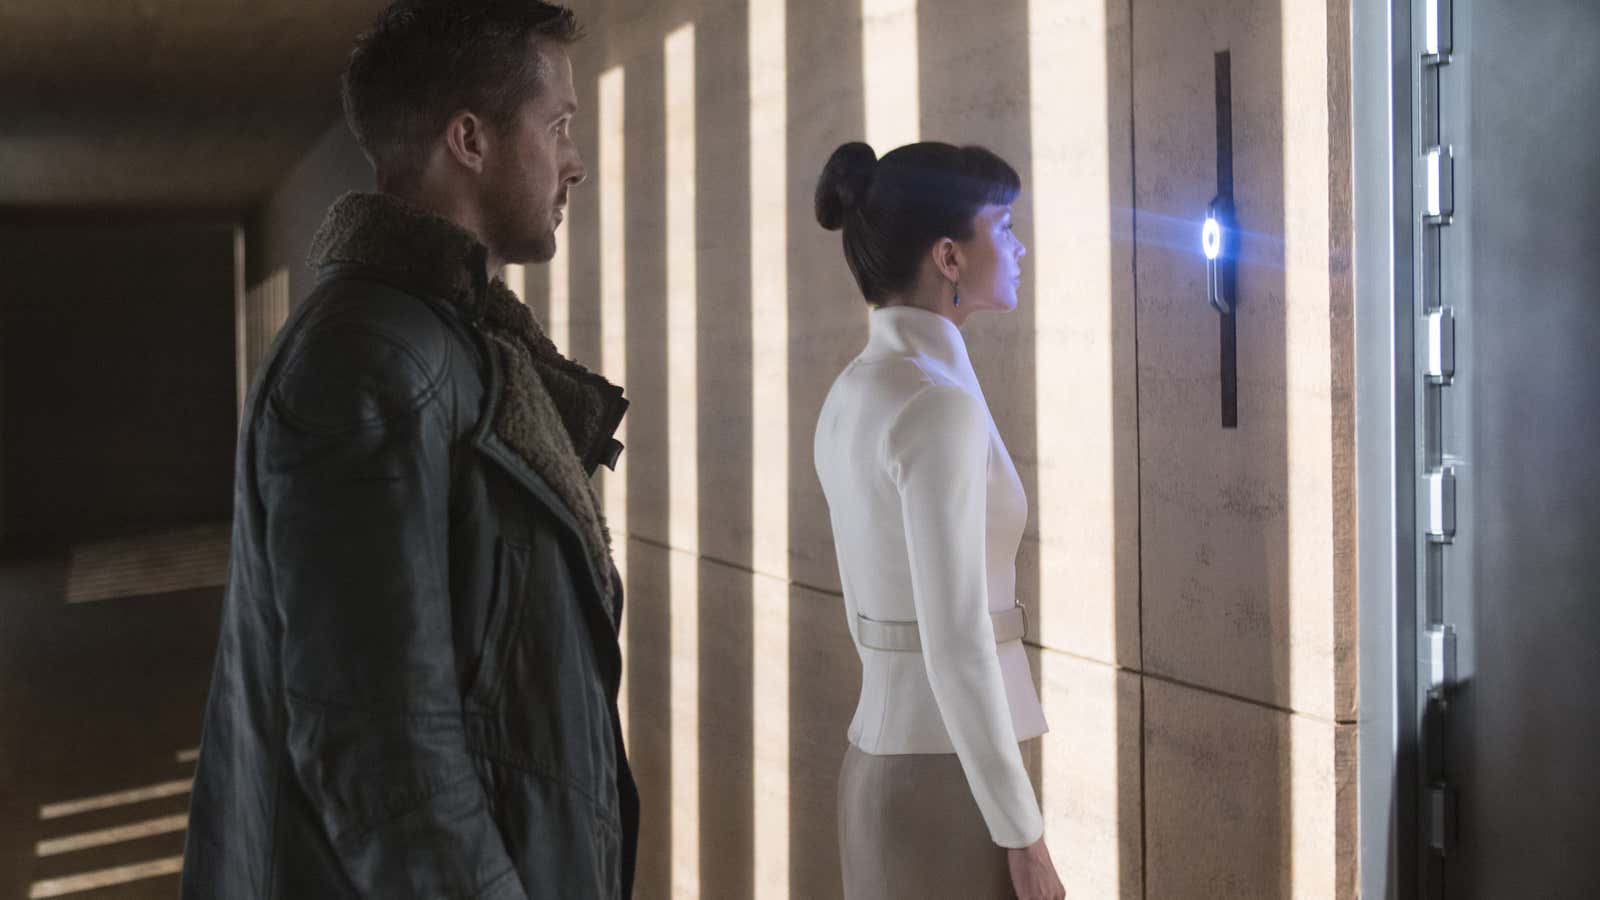 Ryan Gosling's shearling jacket in Blade Runner 2049 isn't real